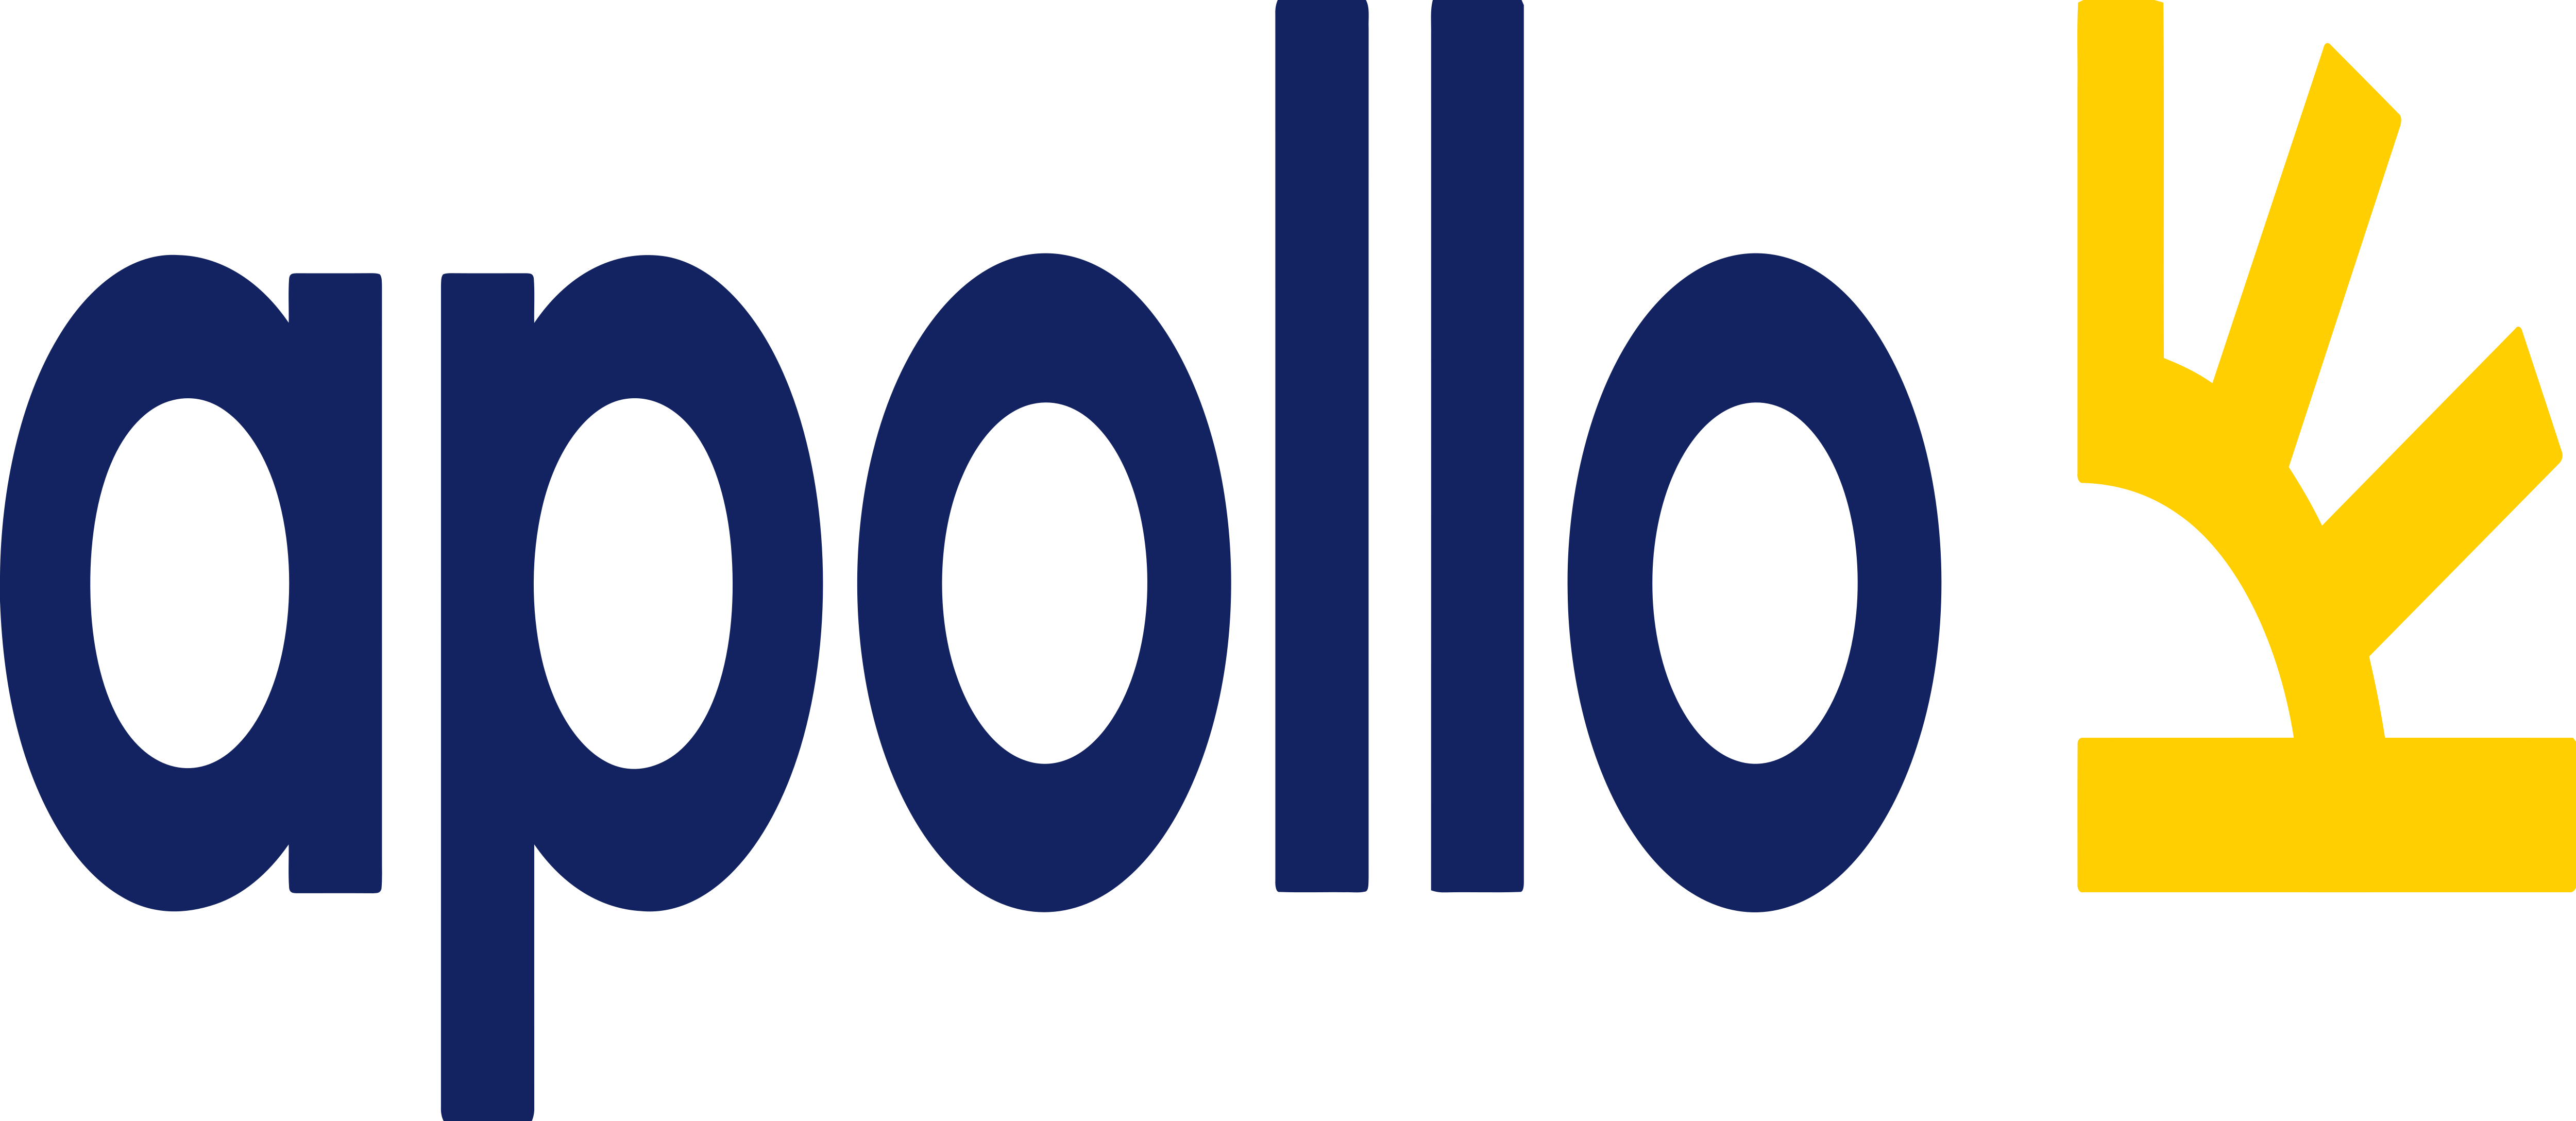 Apollo Logo - Apollo – Logos Download